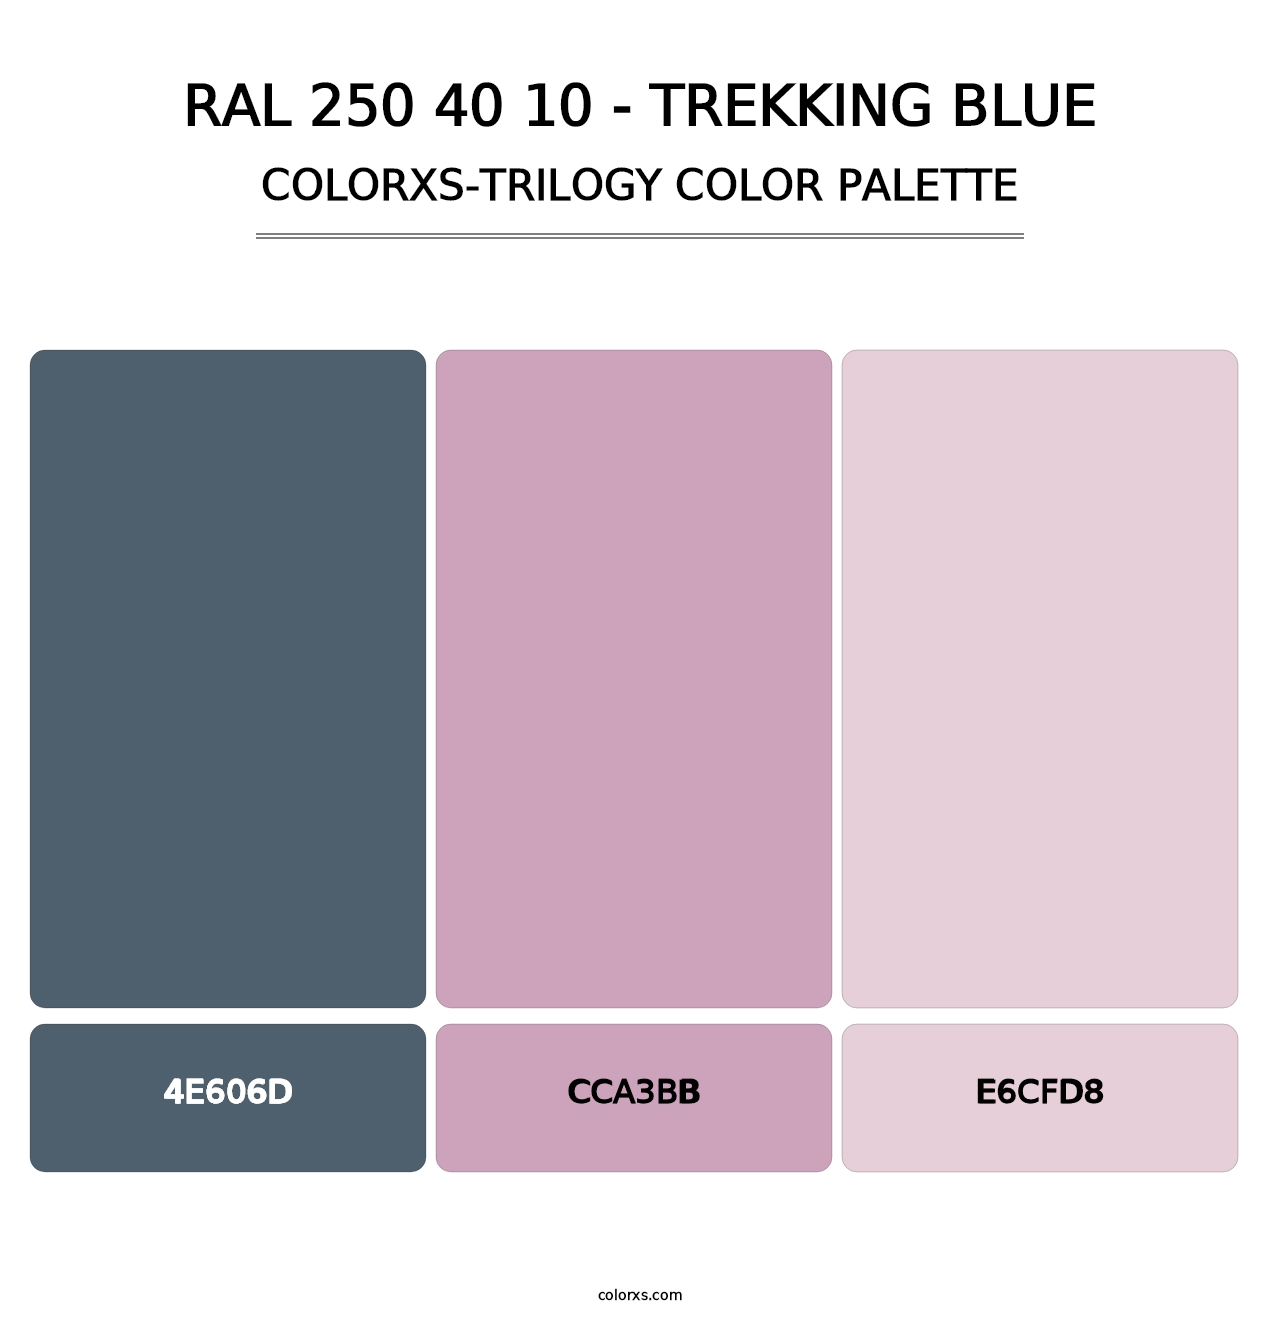 RAL 250 40 10 - Trekking Blue - Colorxs Trilogy Palette